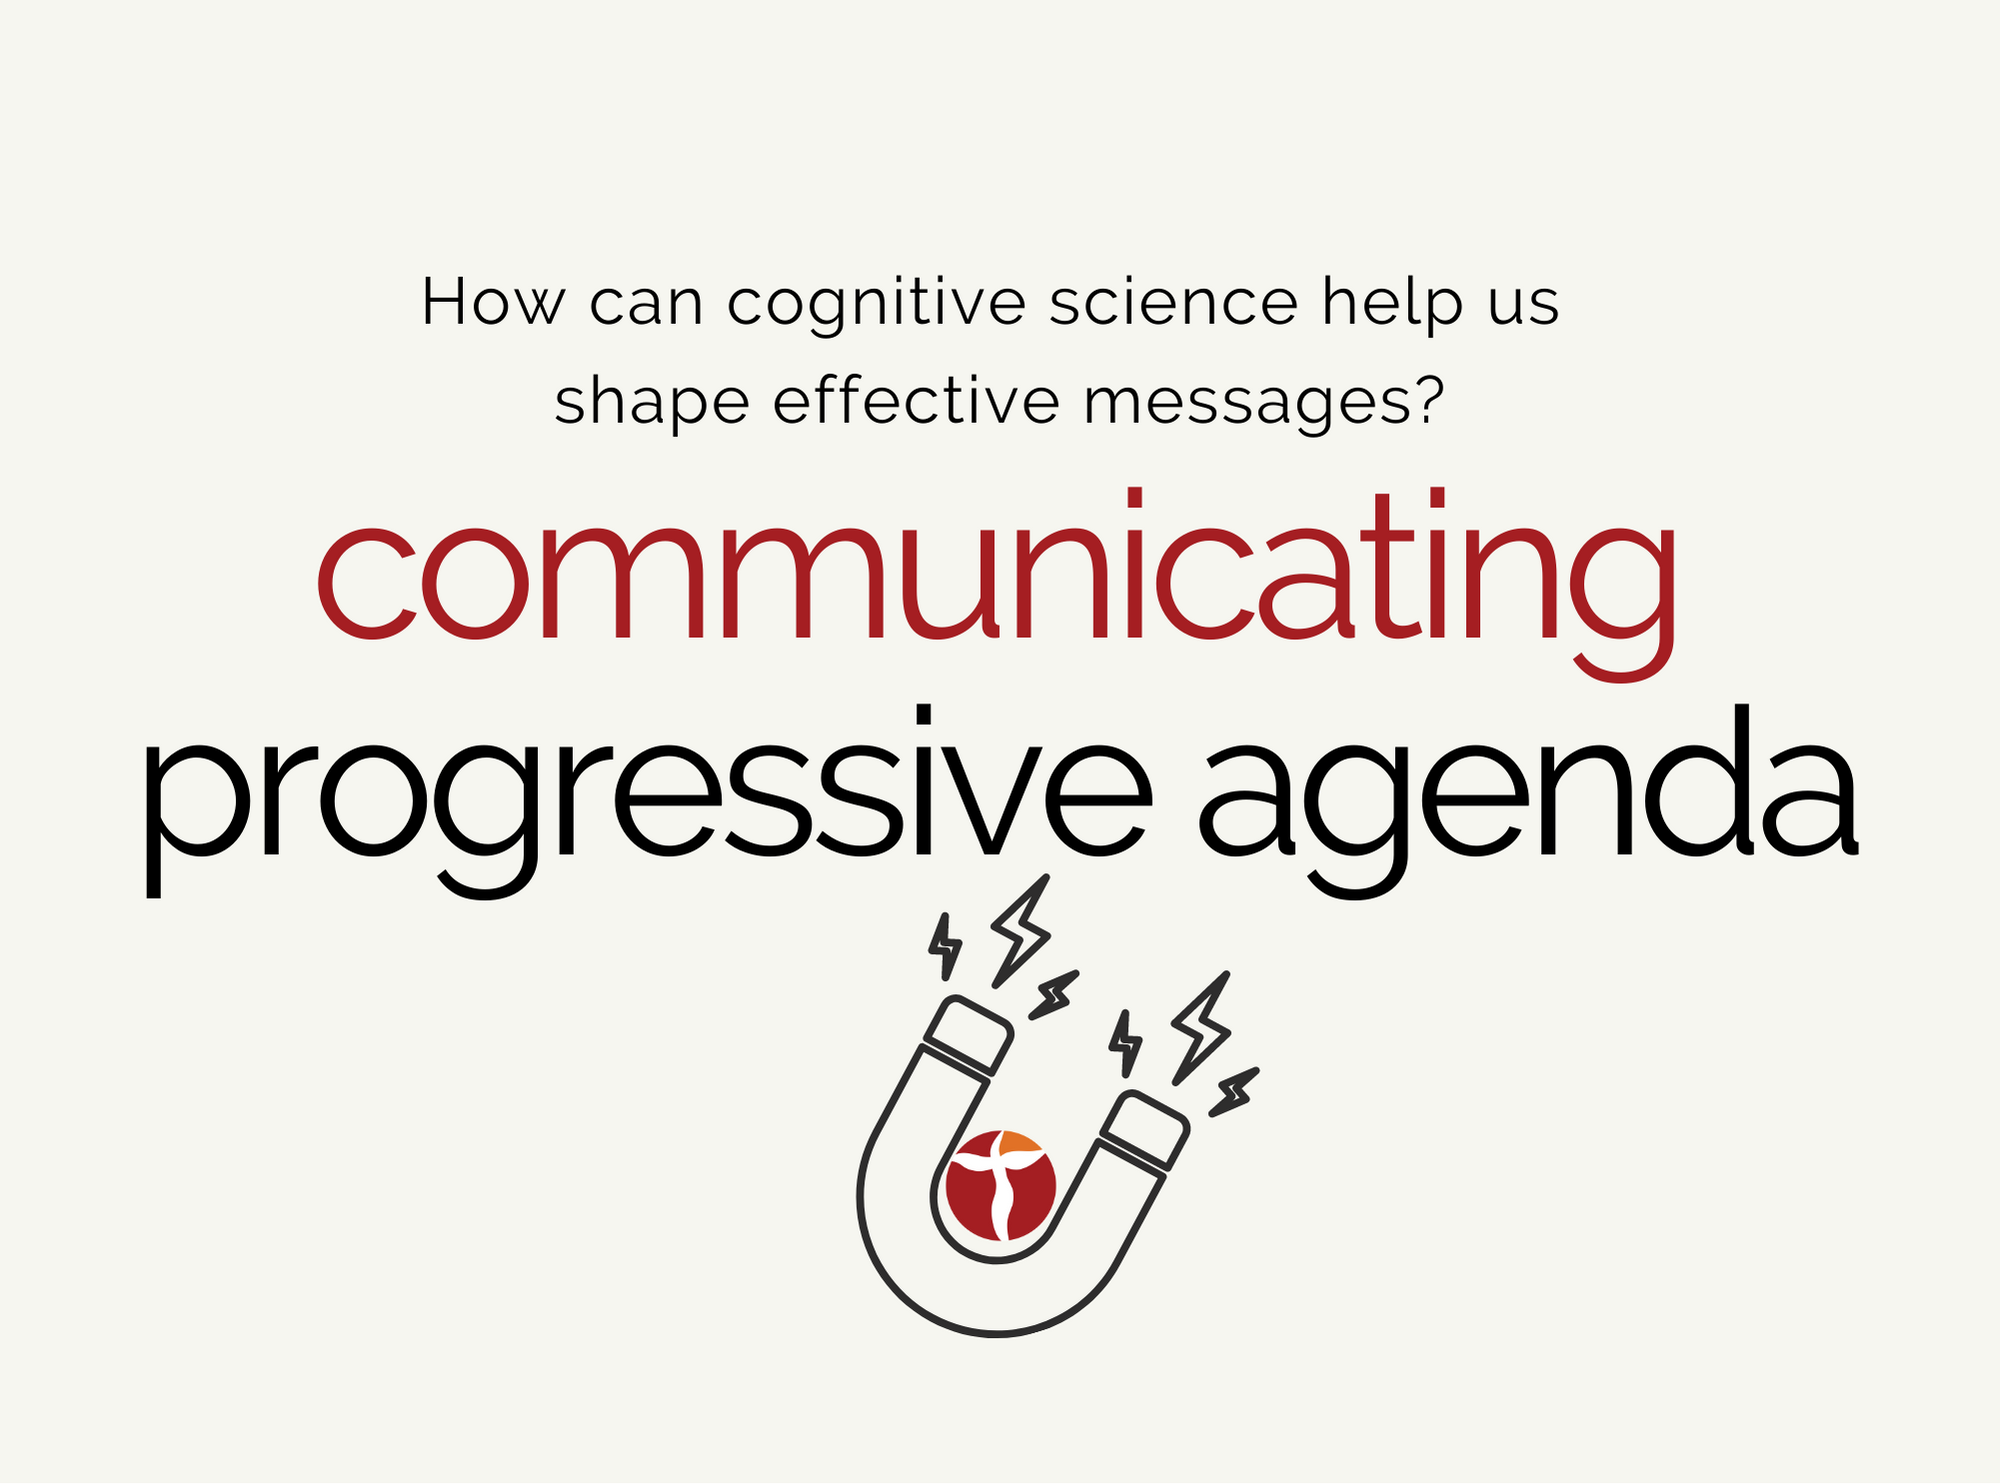 Communicating progressive agenda. How can cognitive science help us shape effective messages?